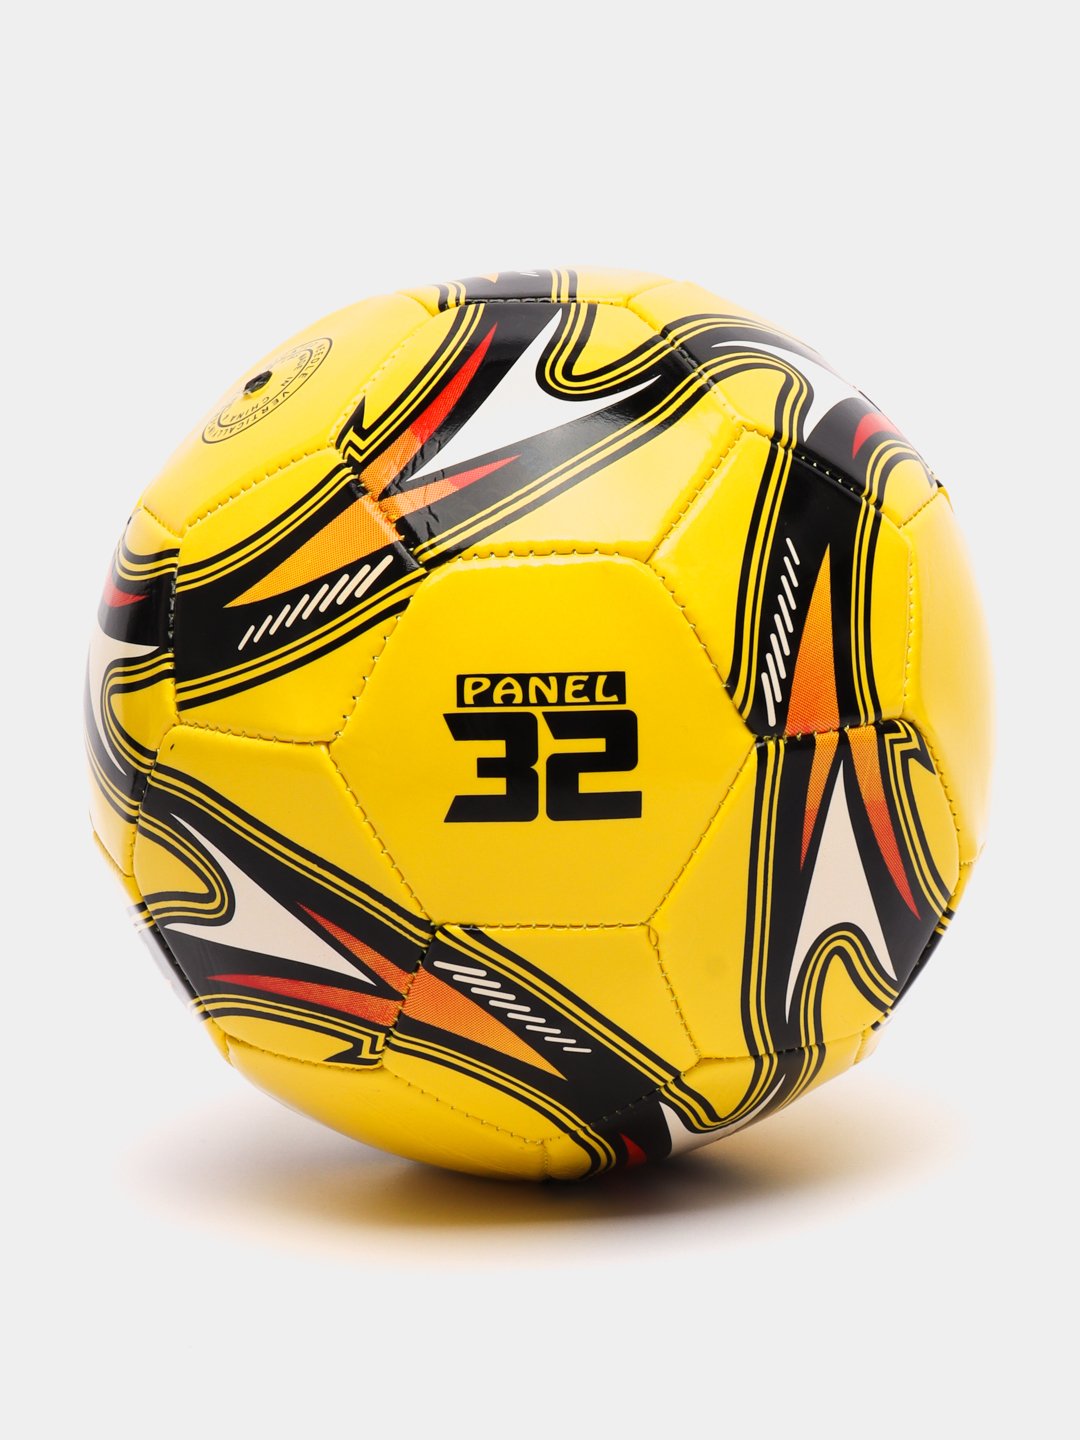 Veld-co мяч футбольный. Baisidiwei футбольный мяч. Желтый футбольный мяч.